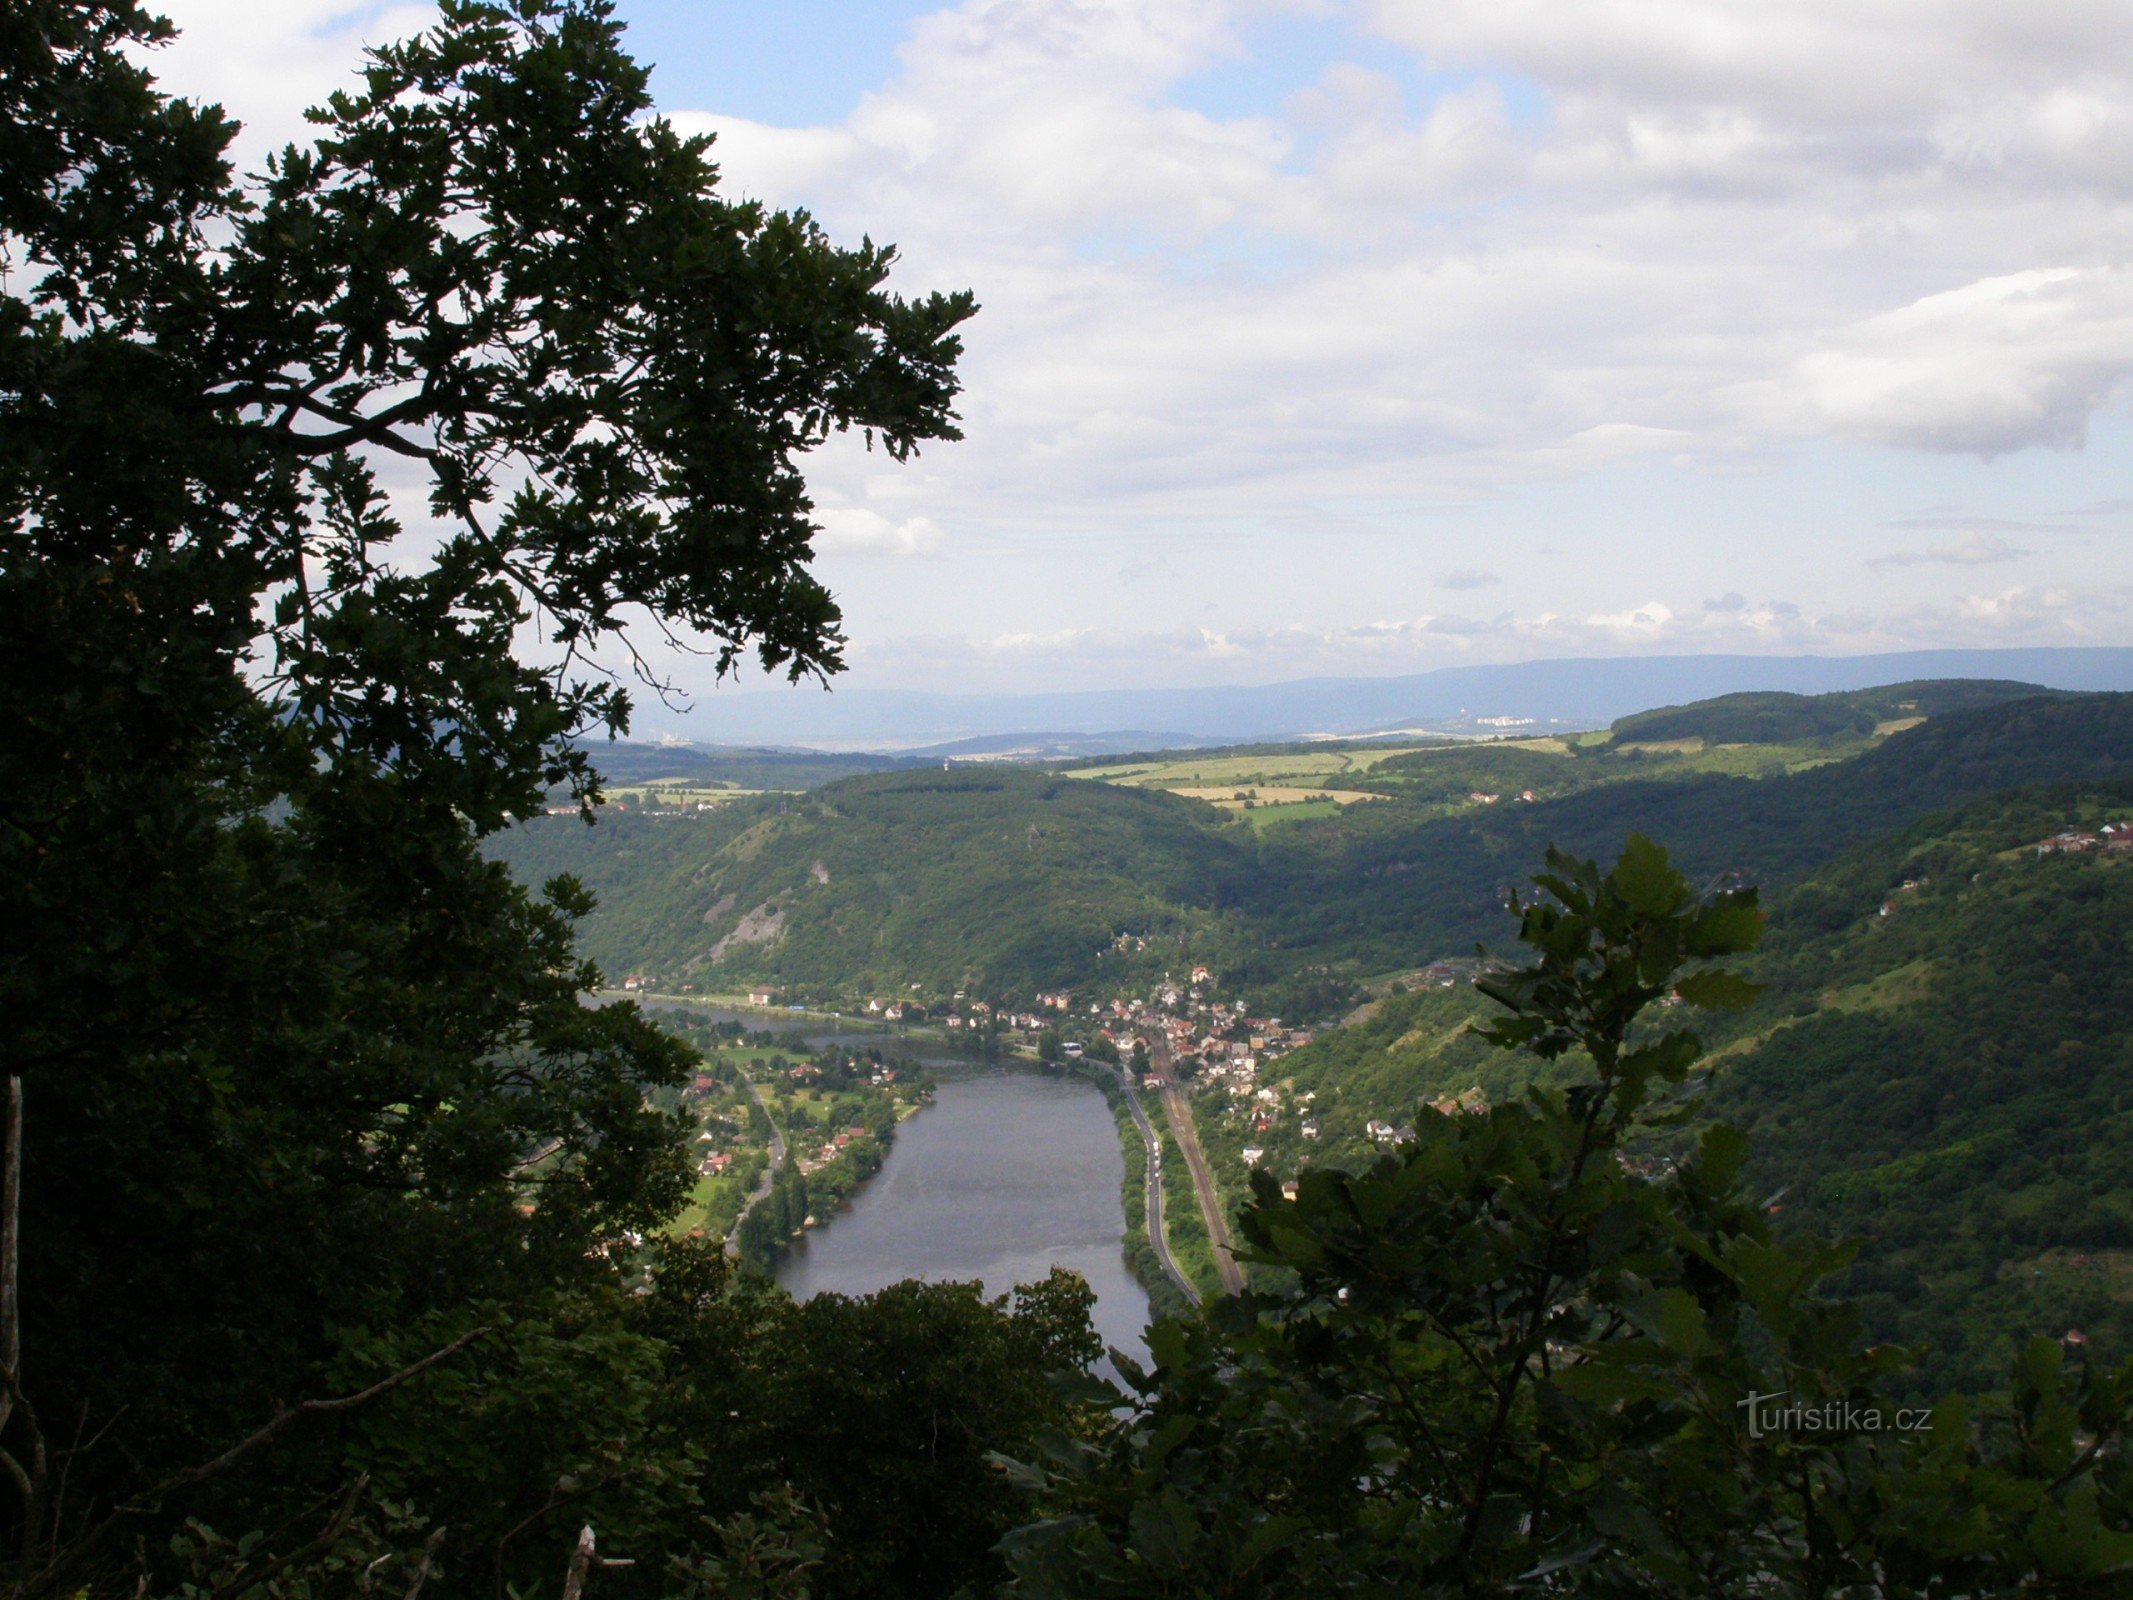 udsigt over Elben-dalen, mens du bestiger Varhošť